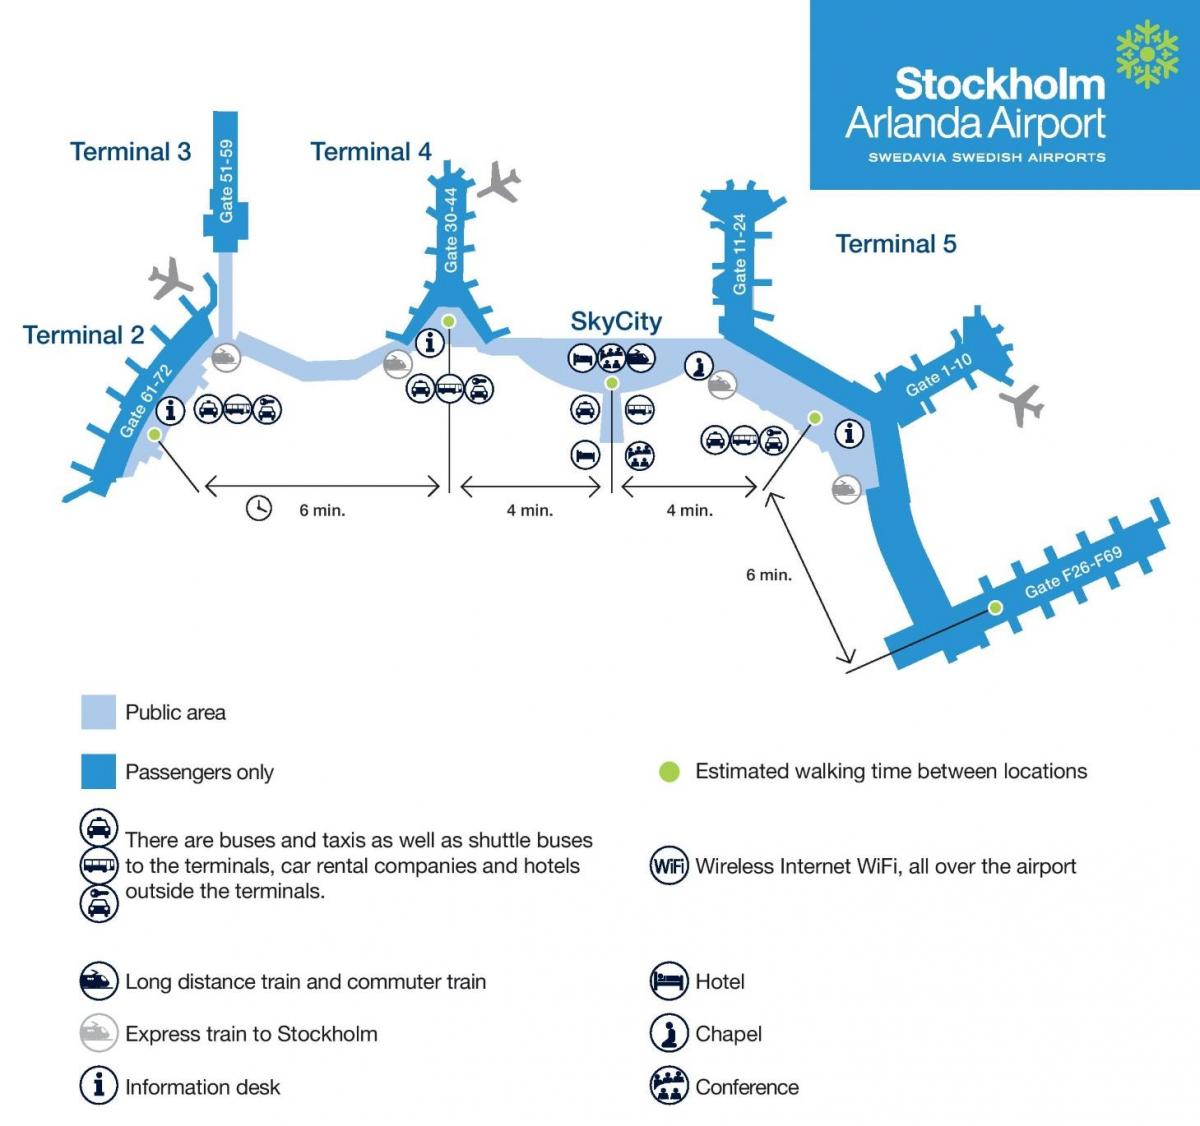 Stokholmo arlanda žemėlapyje